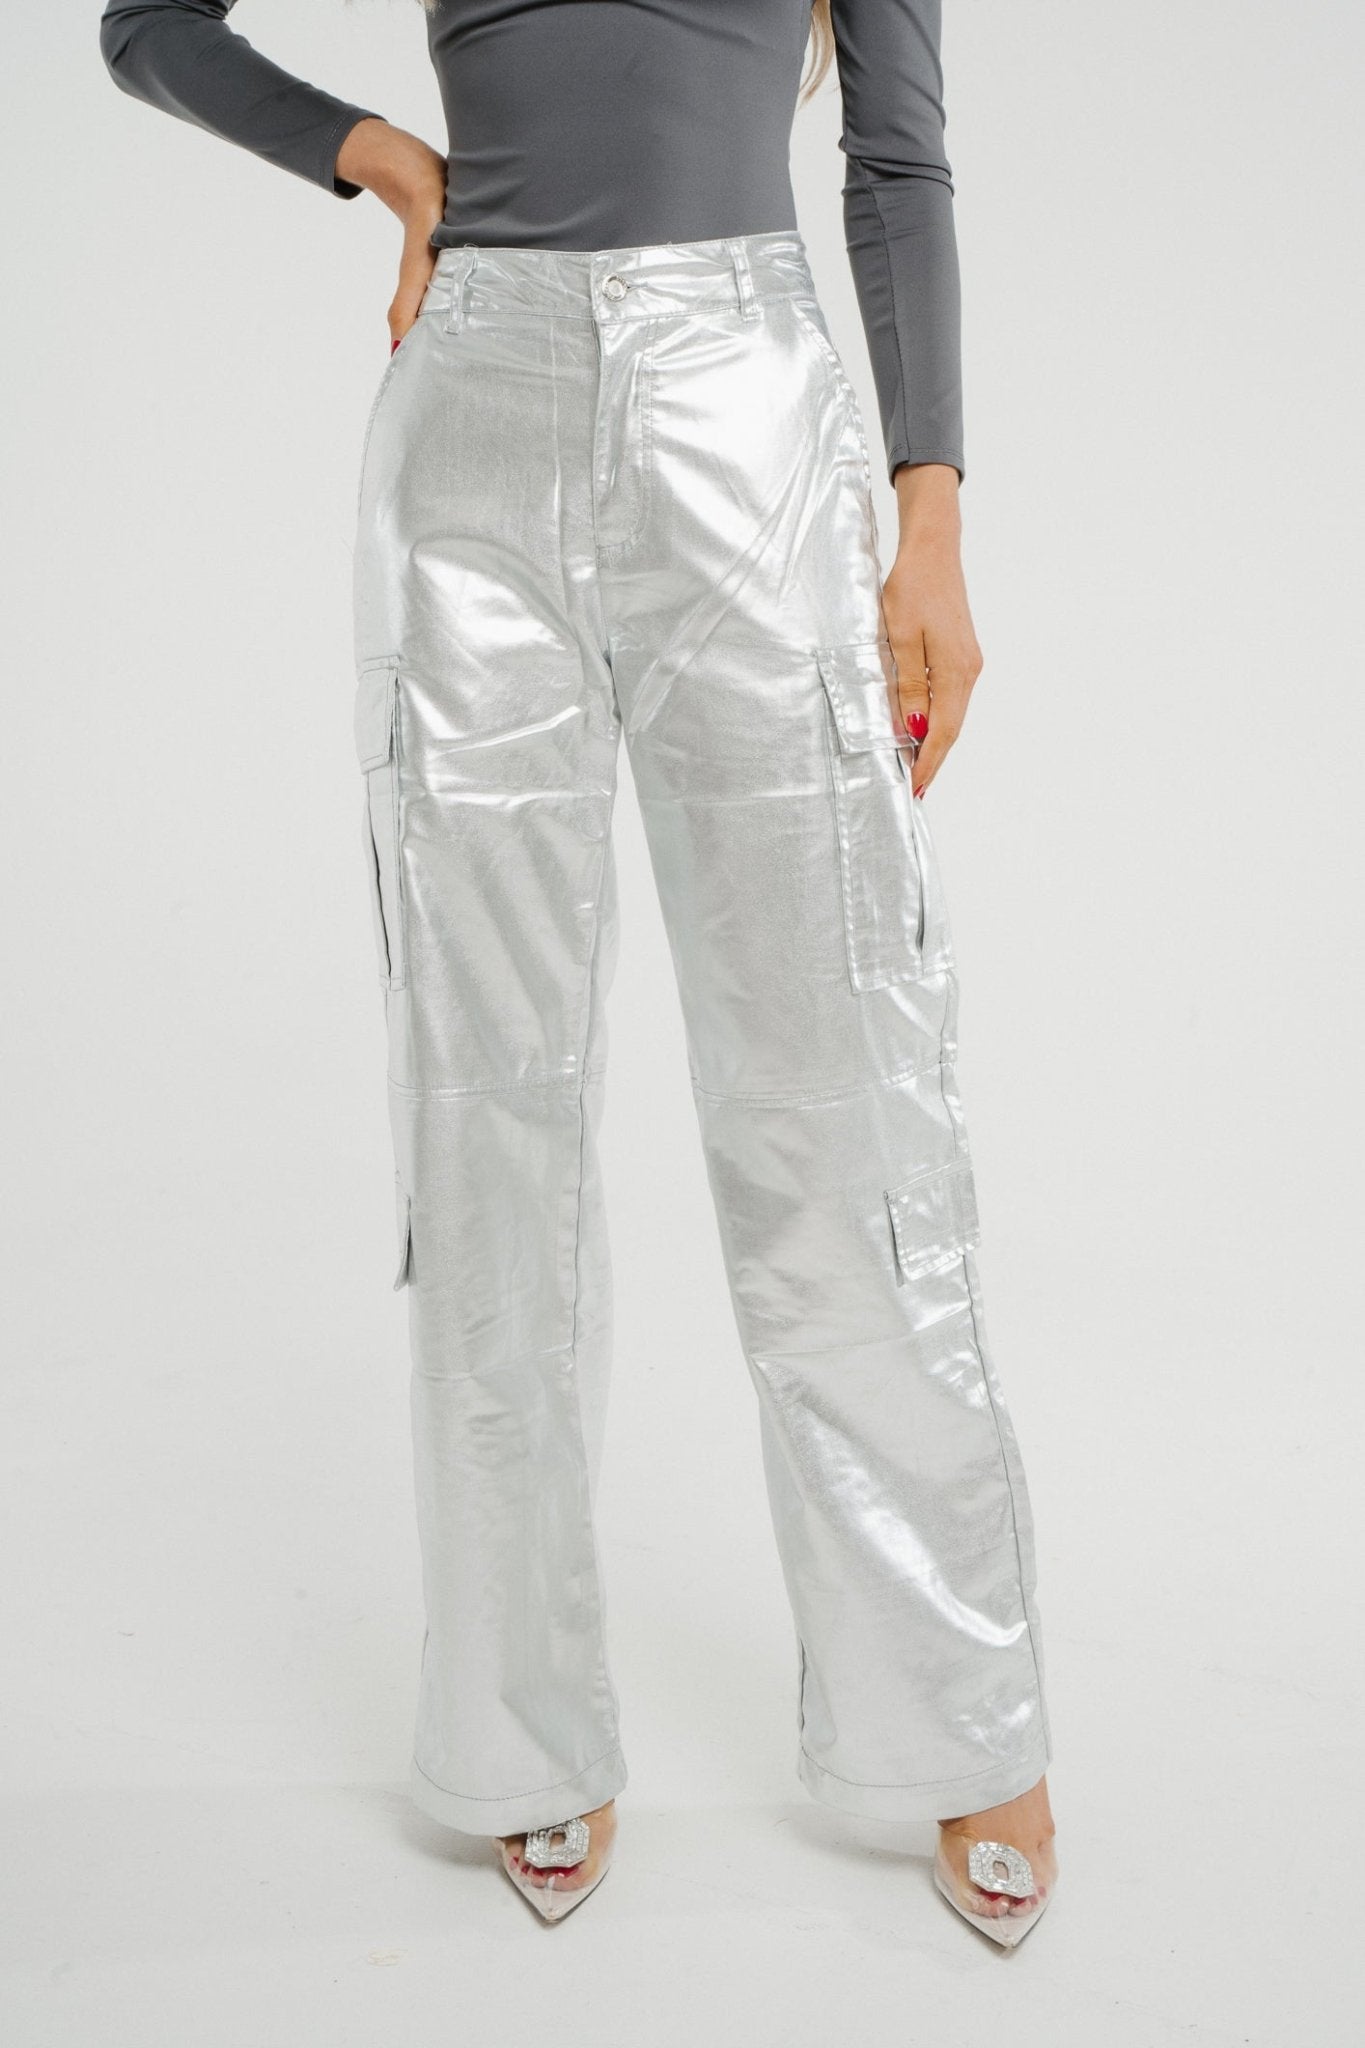 Summer Metallic Combat Trousers In Silver - The Walk in Wardrobe